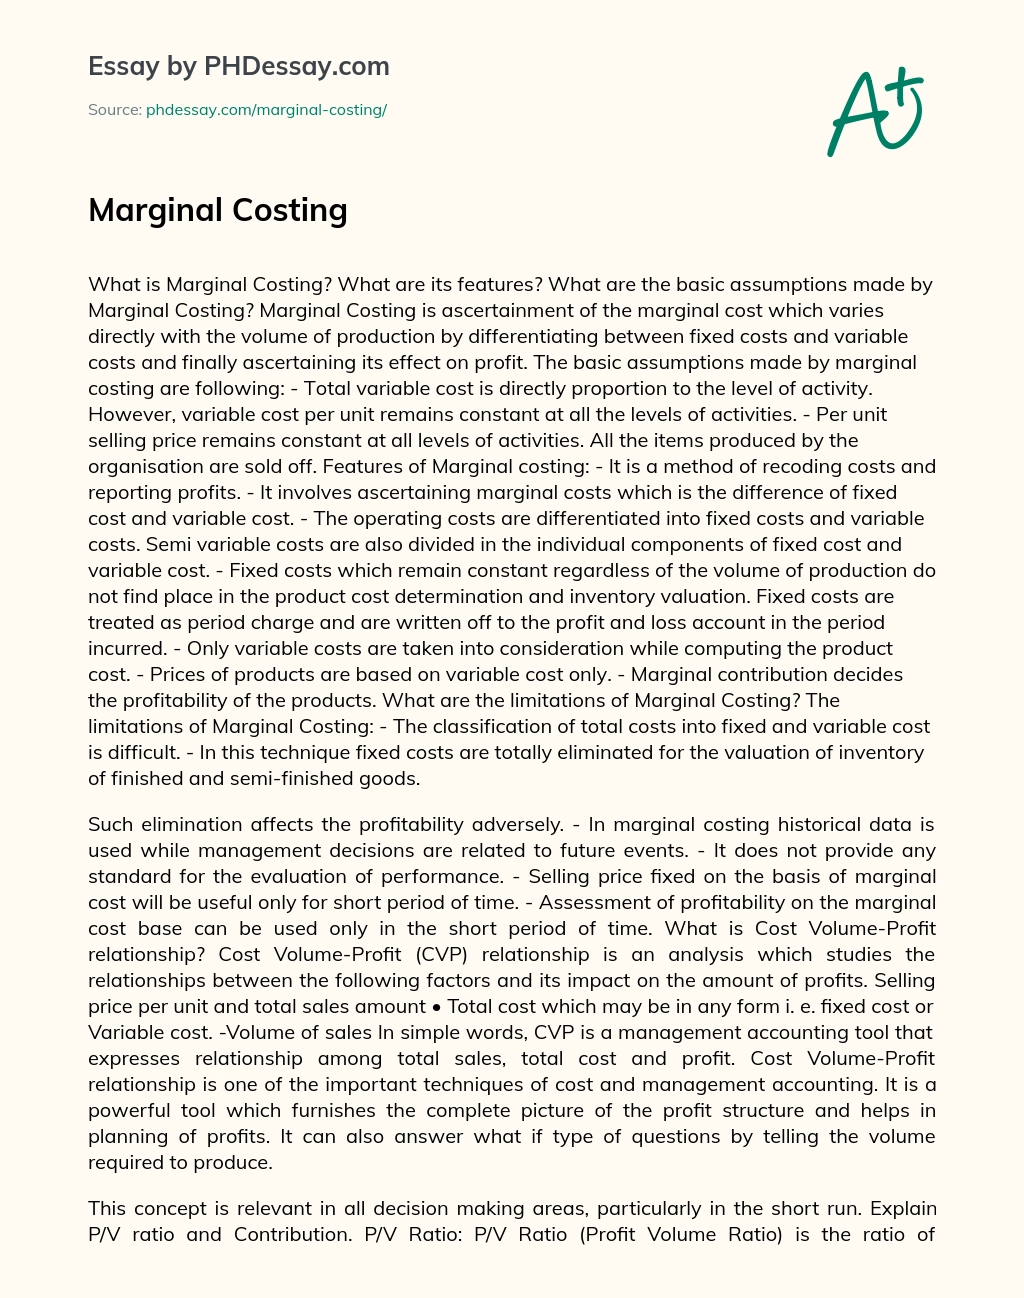 Marginal Costing essay